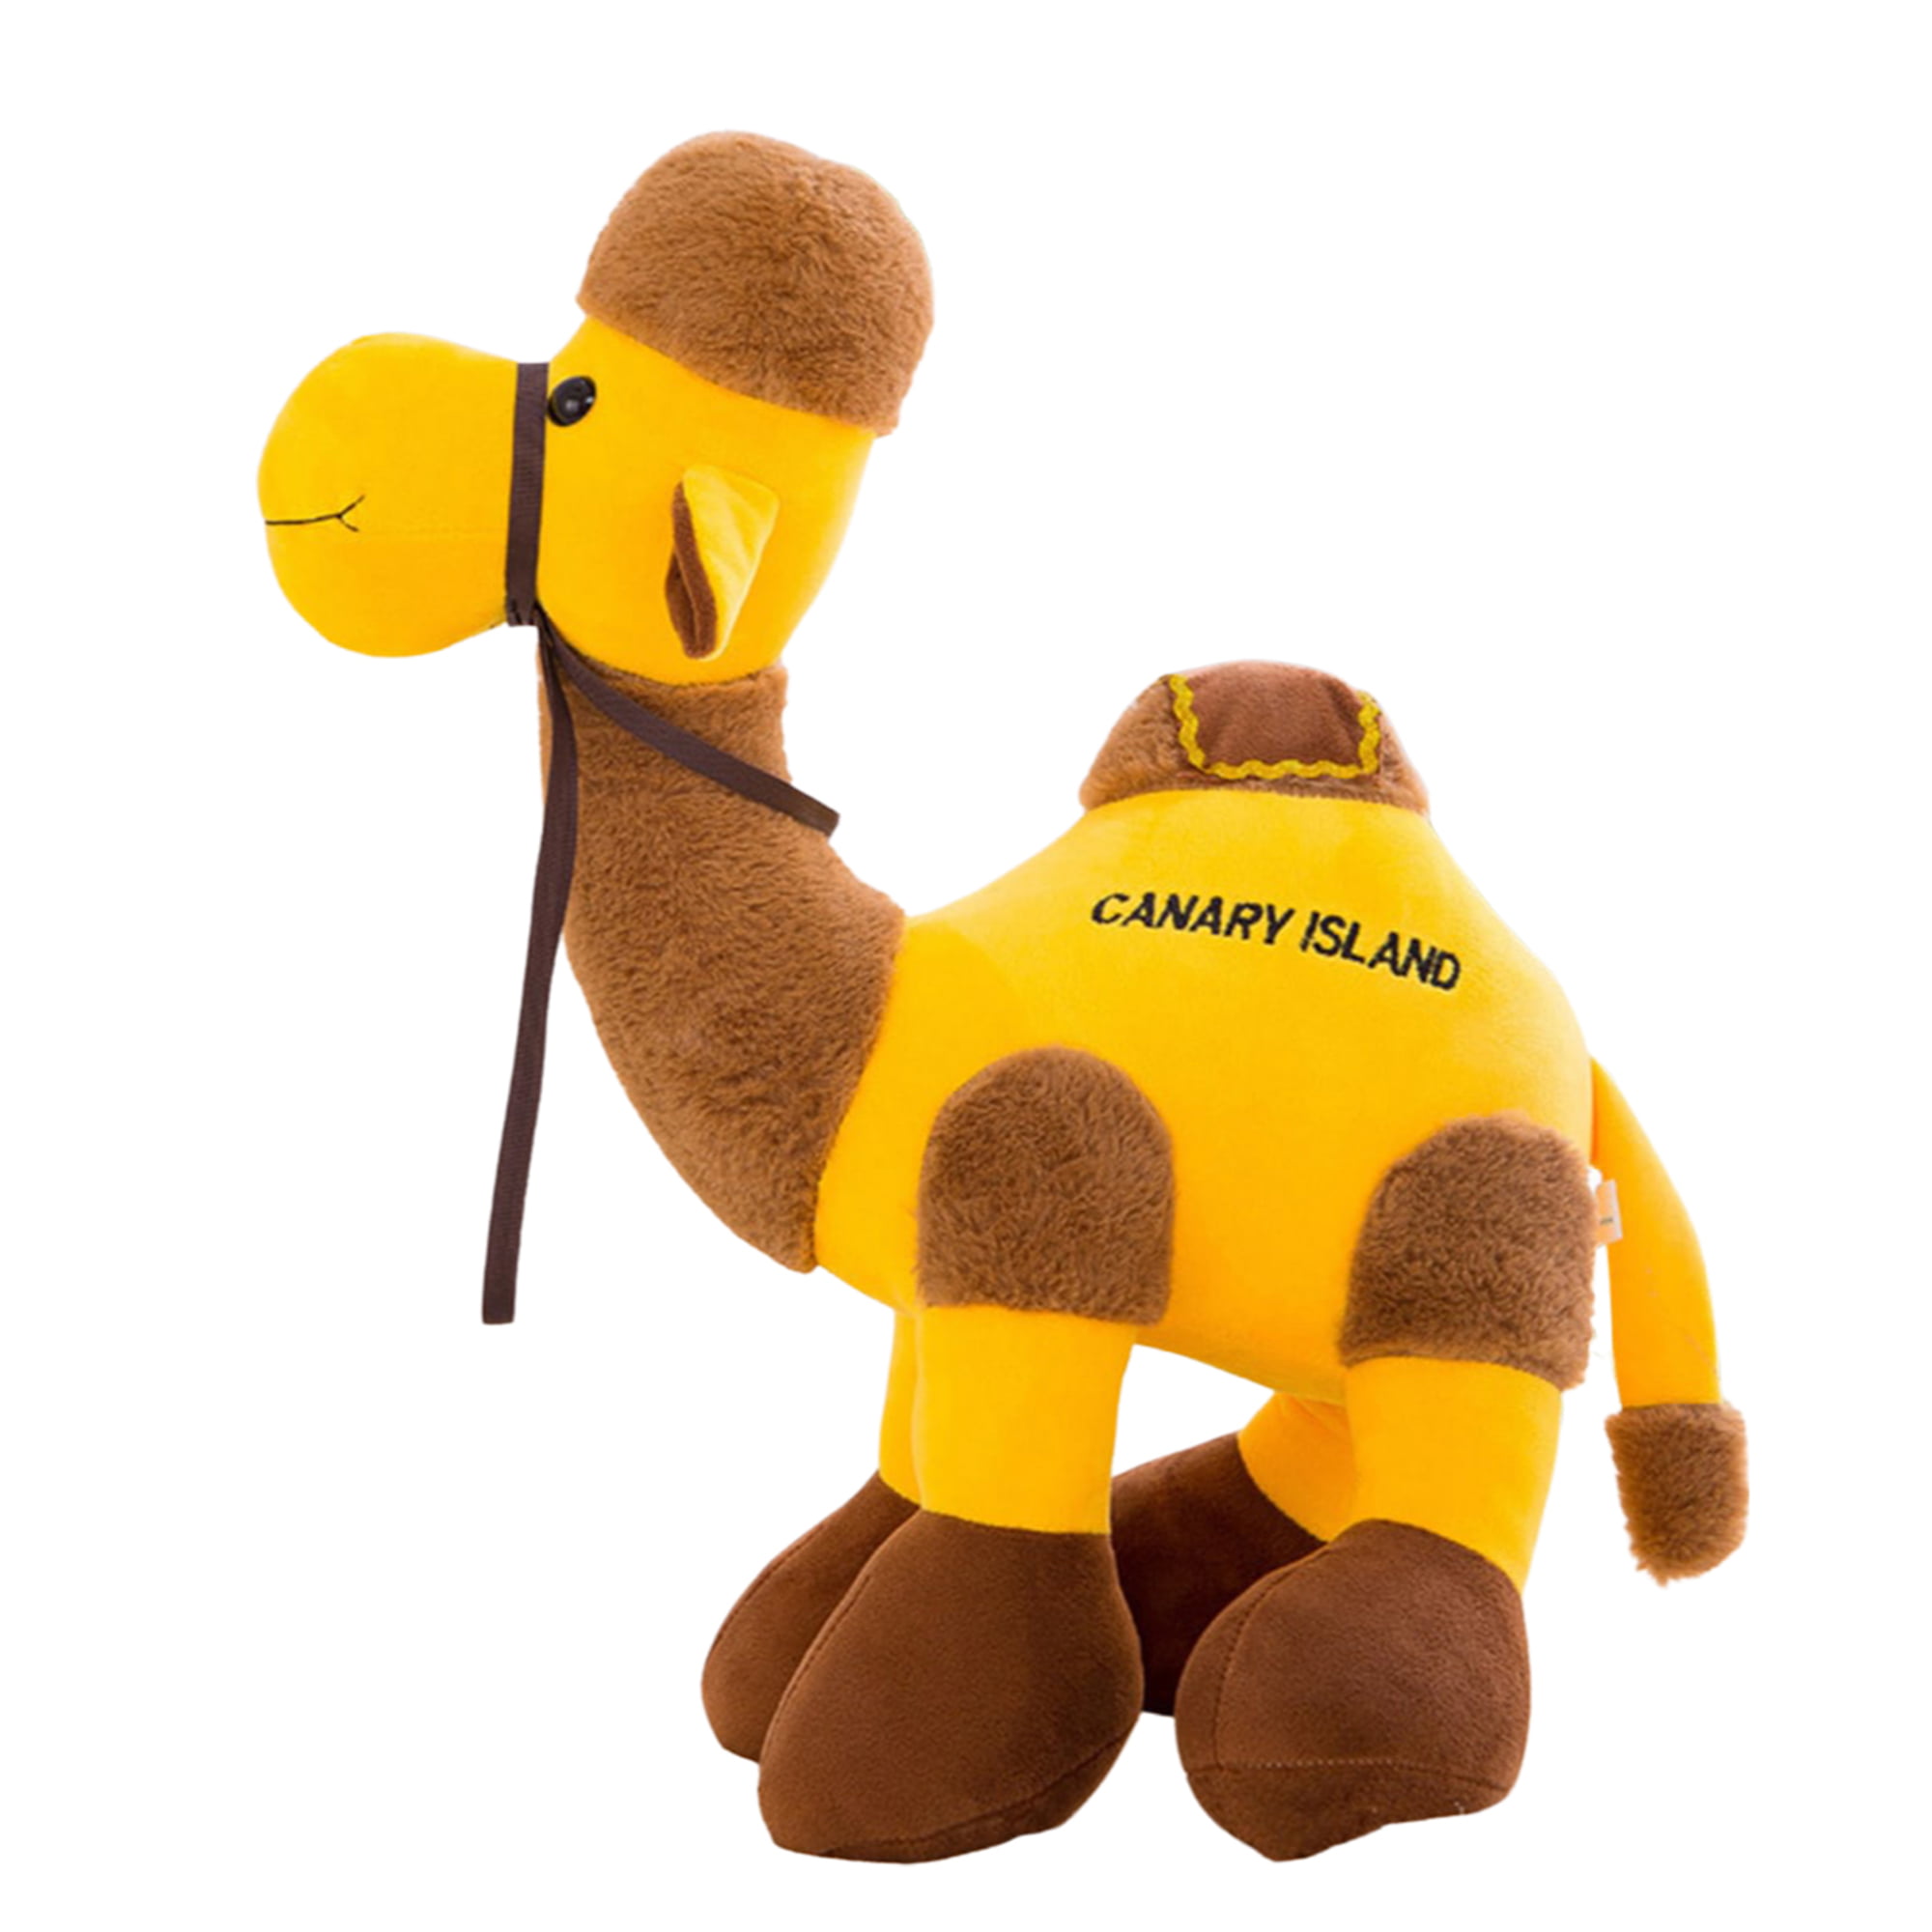 Stuffed Plush Camel Toy Plush Animal Toy Stuffed Toys for Children Xmas Gift